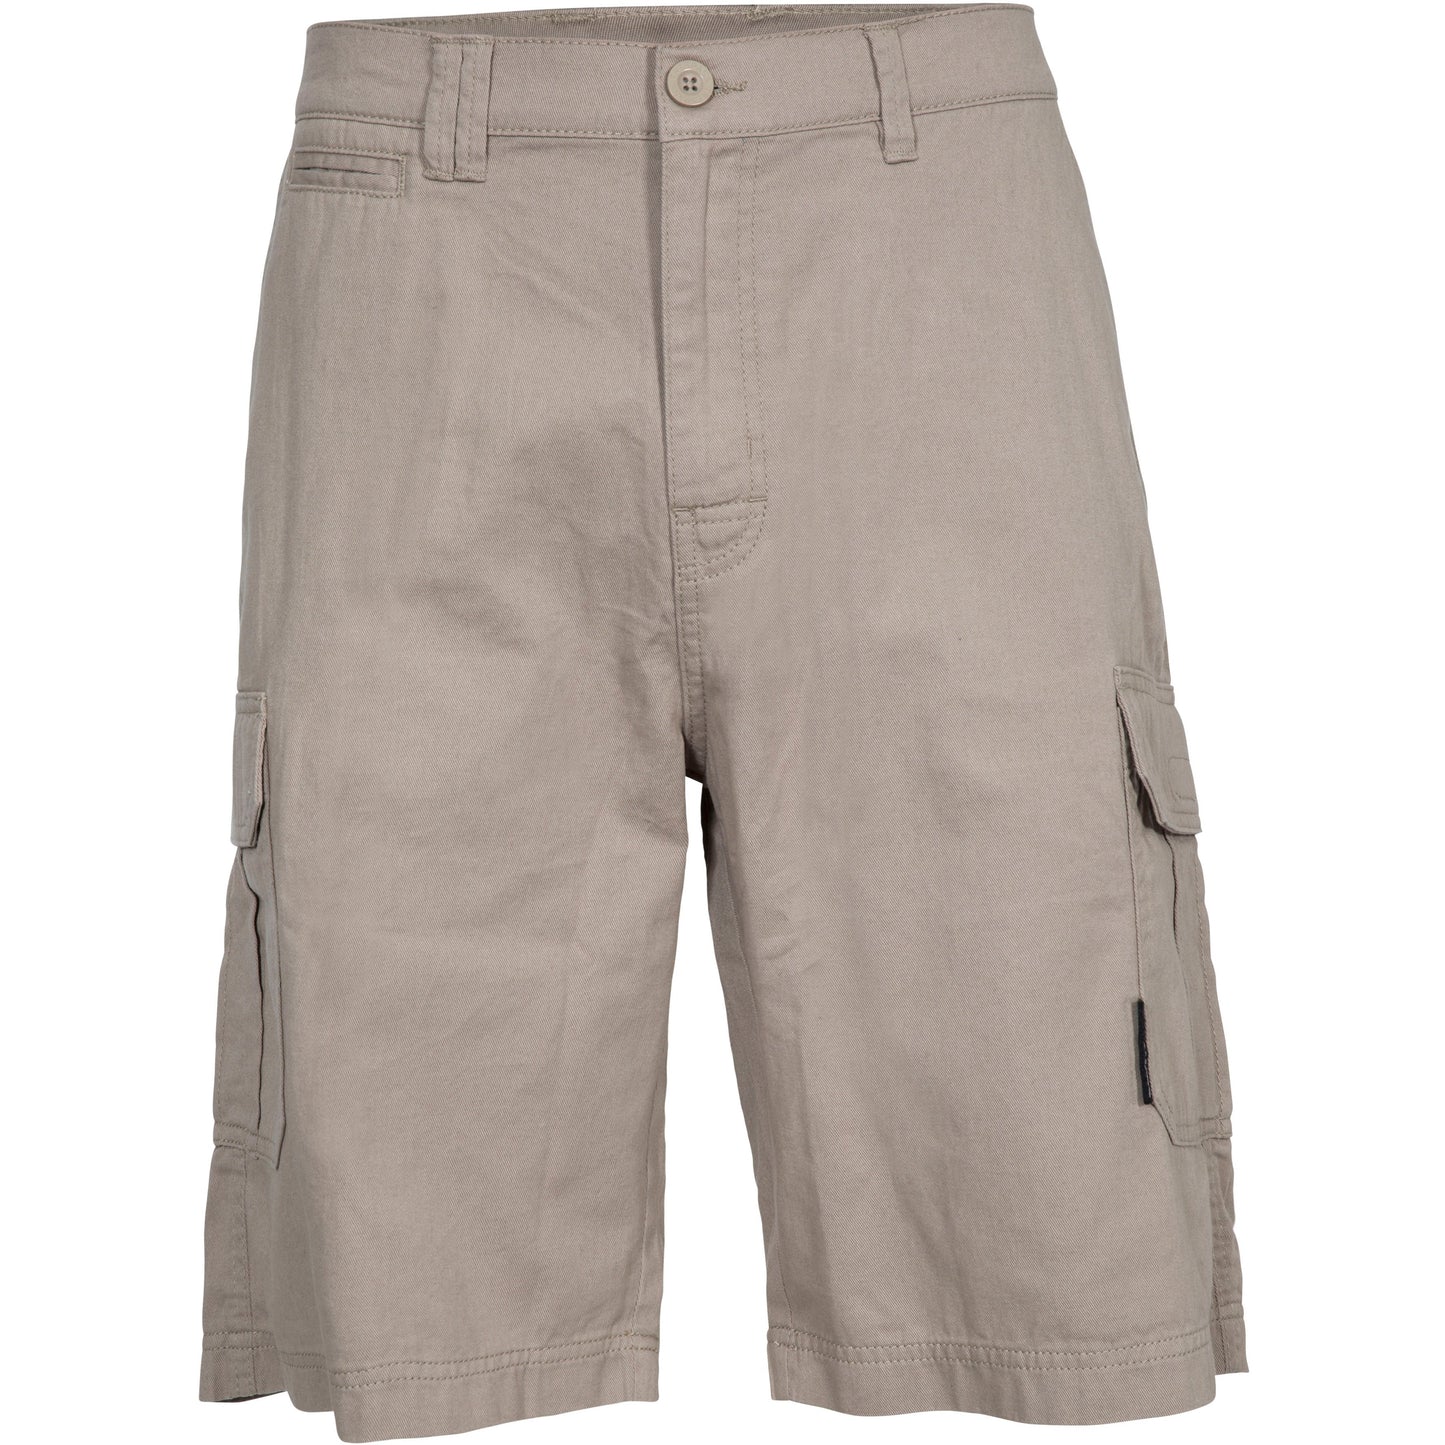 Rawson Men's Cargo Shorts - Oatmeal